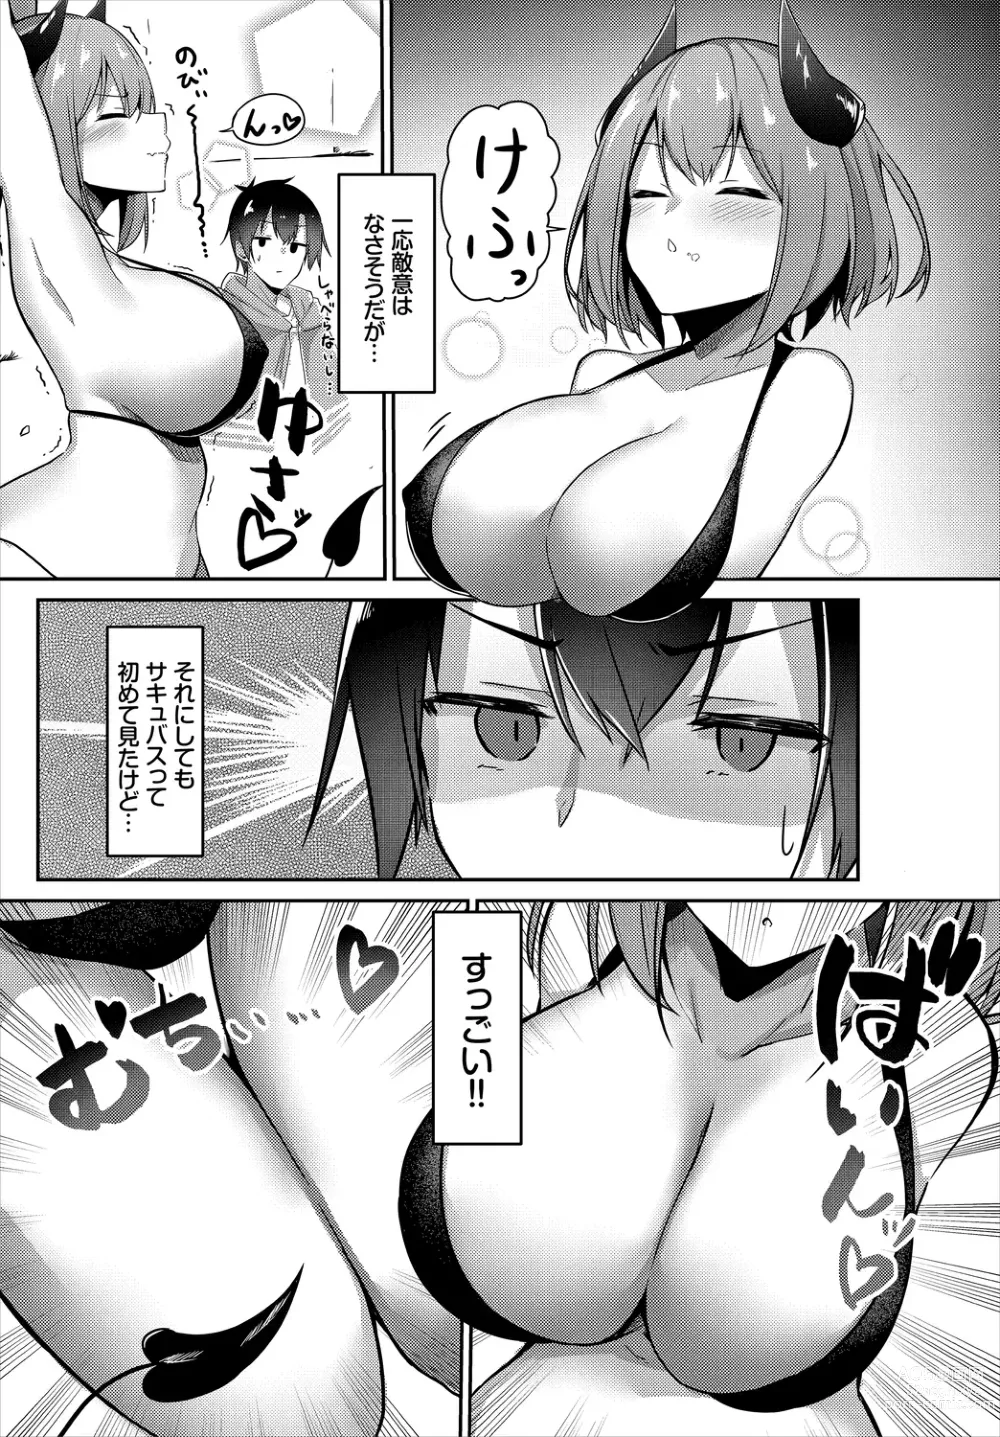 Page 6 of manga Meikyuu Lilac - Laberynth Lilac.